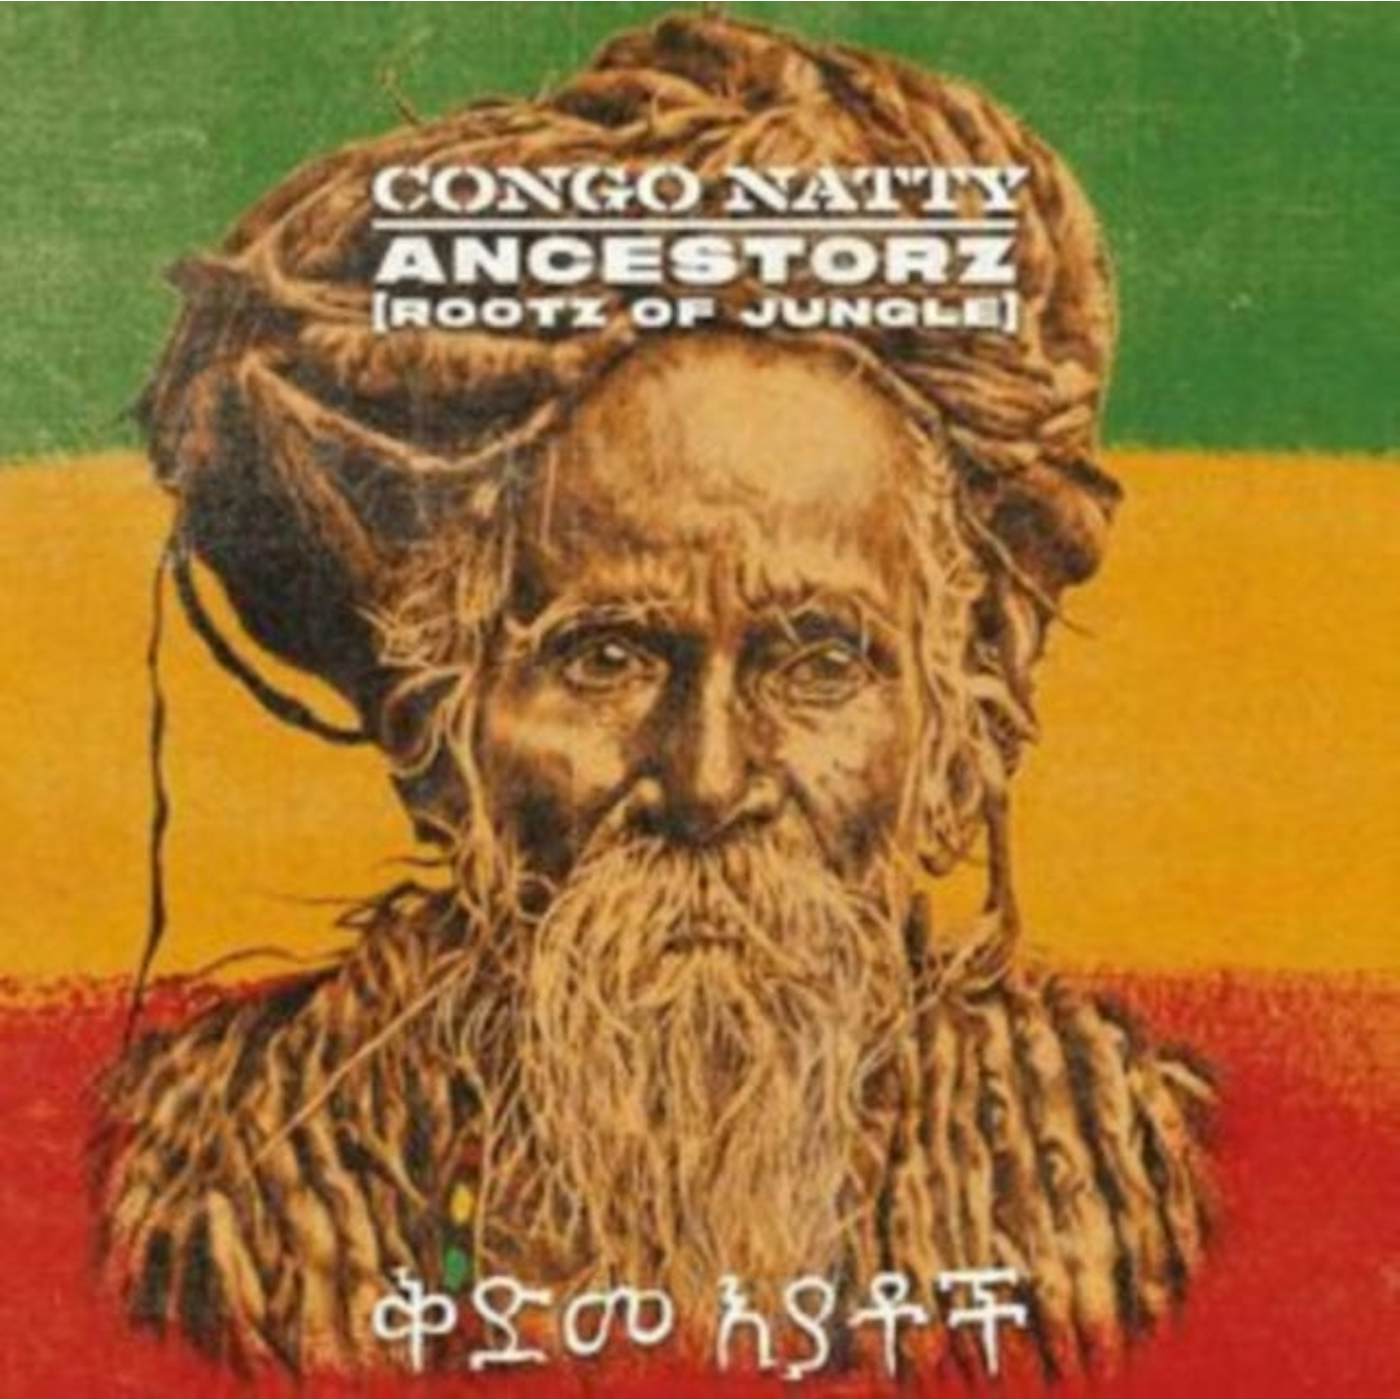 Congo Natty LP - Ancestorz (Rootz Of Jungle) (Vinyl)